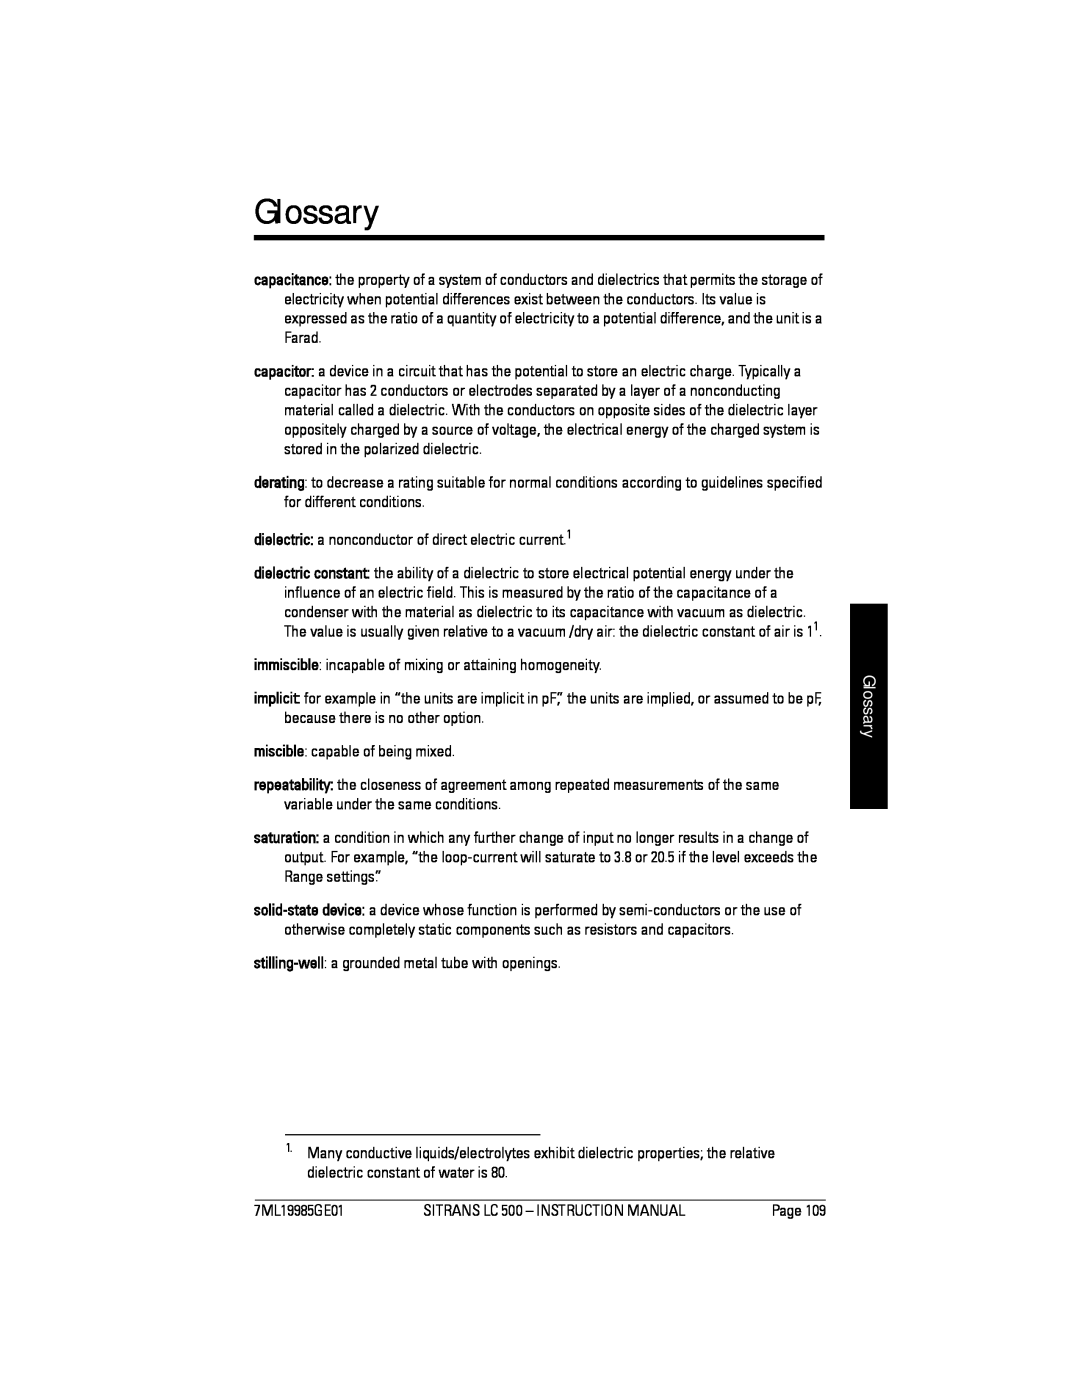 Siemens Sitrans, LC 500 instruction manual Glossary 